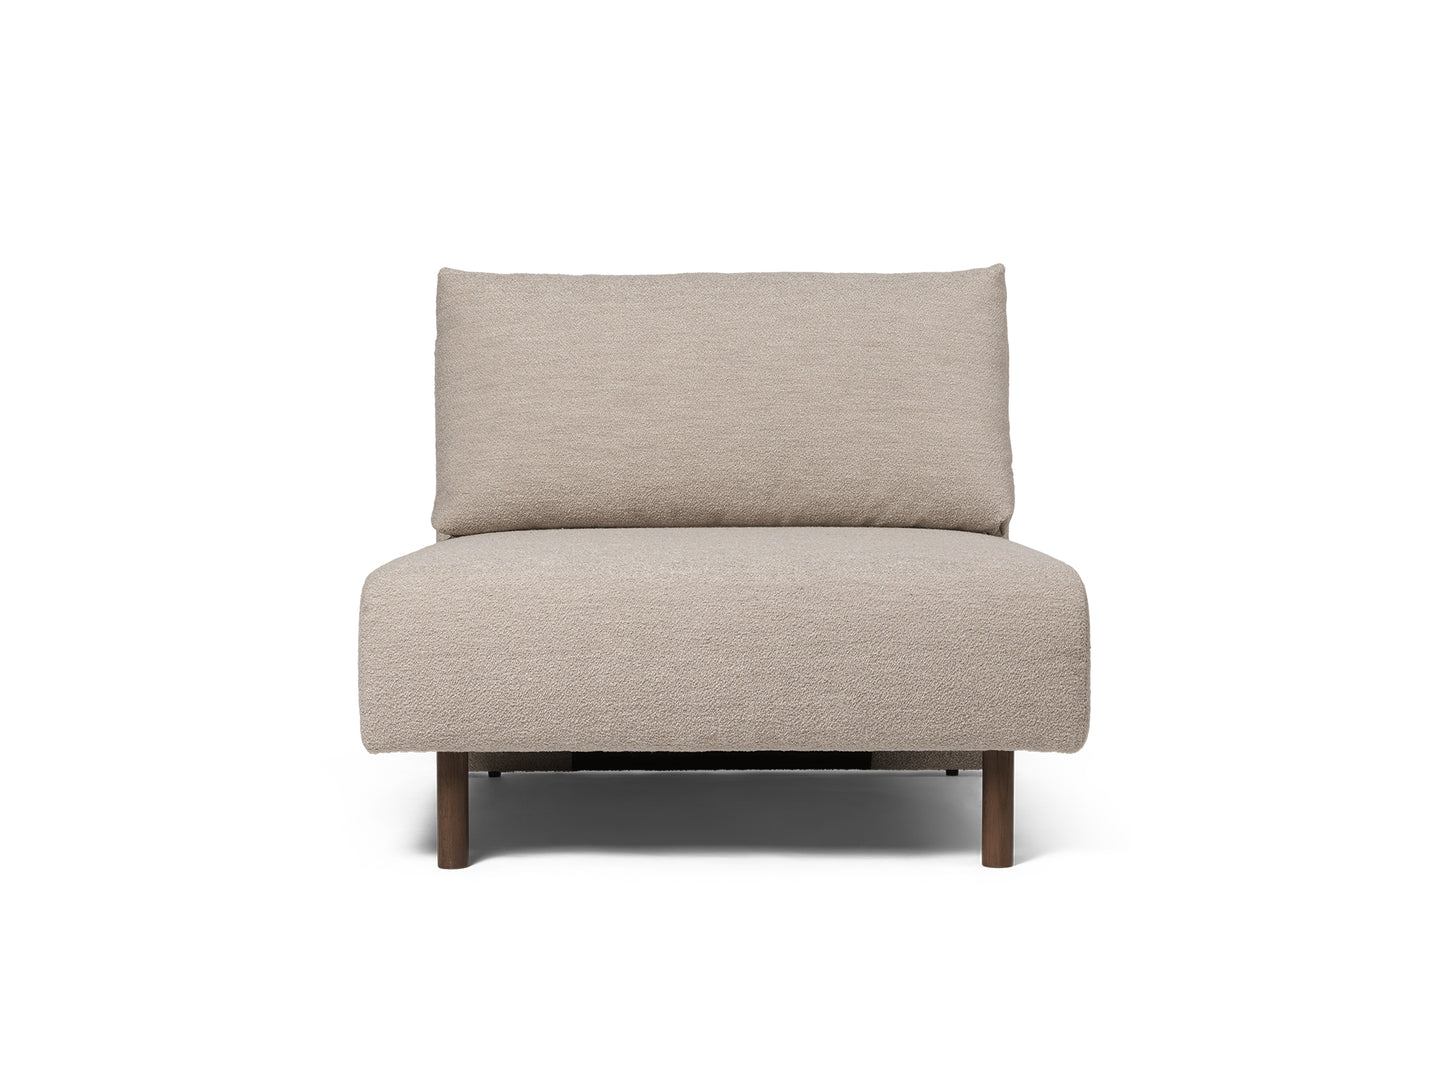 Dase Modular Sofa - Individual Modules by Ferm Living - Centre Module / Soft Boucle / Natural